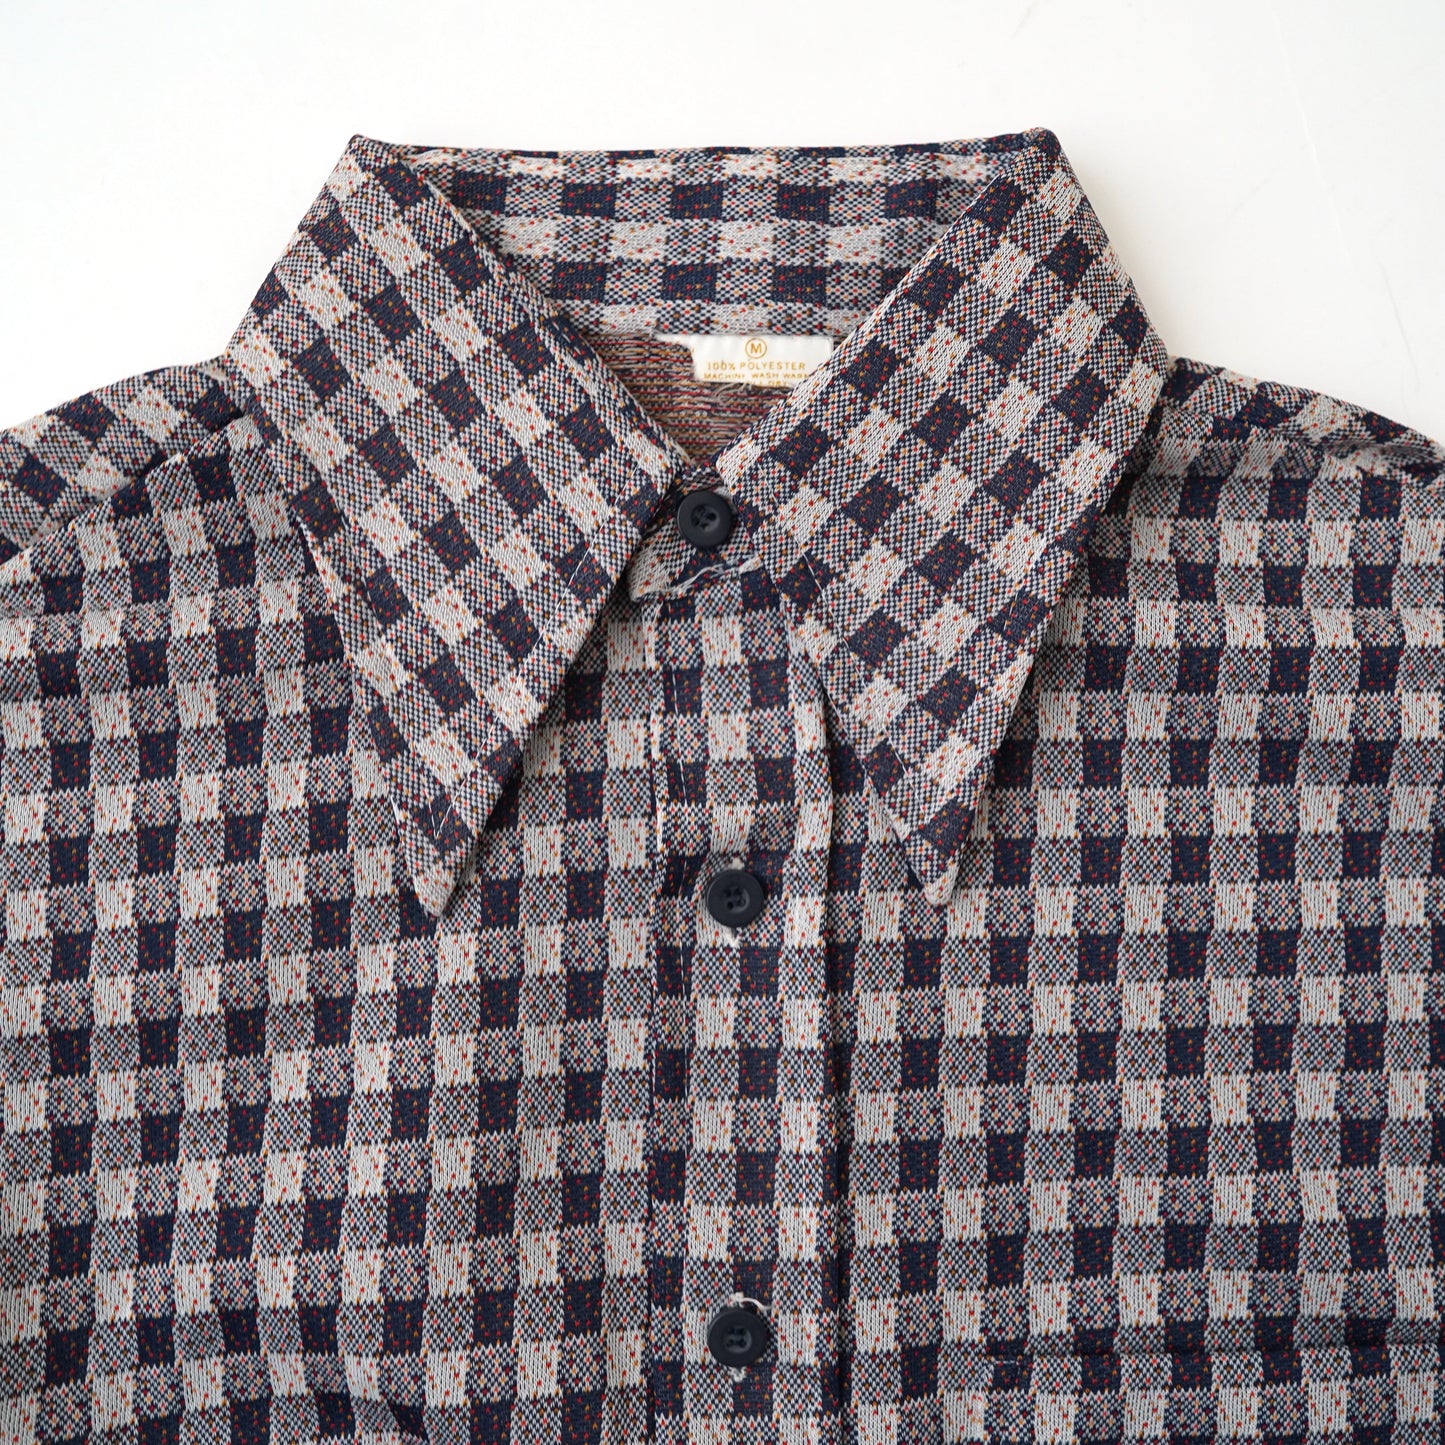 70s Check pattern shirt